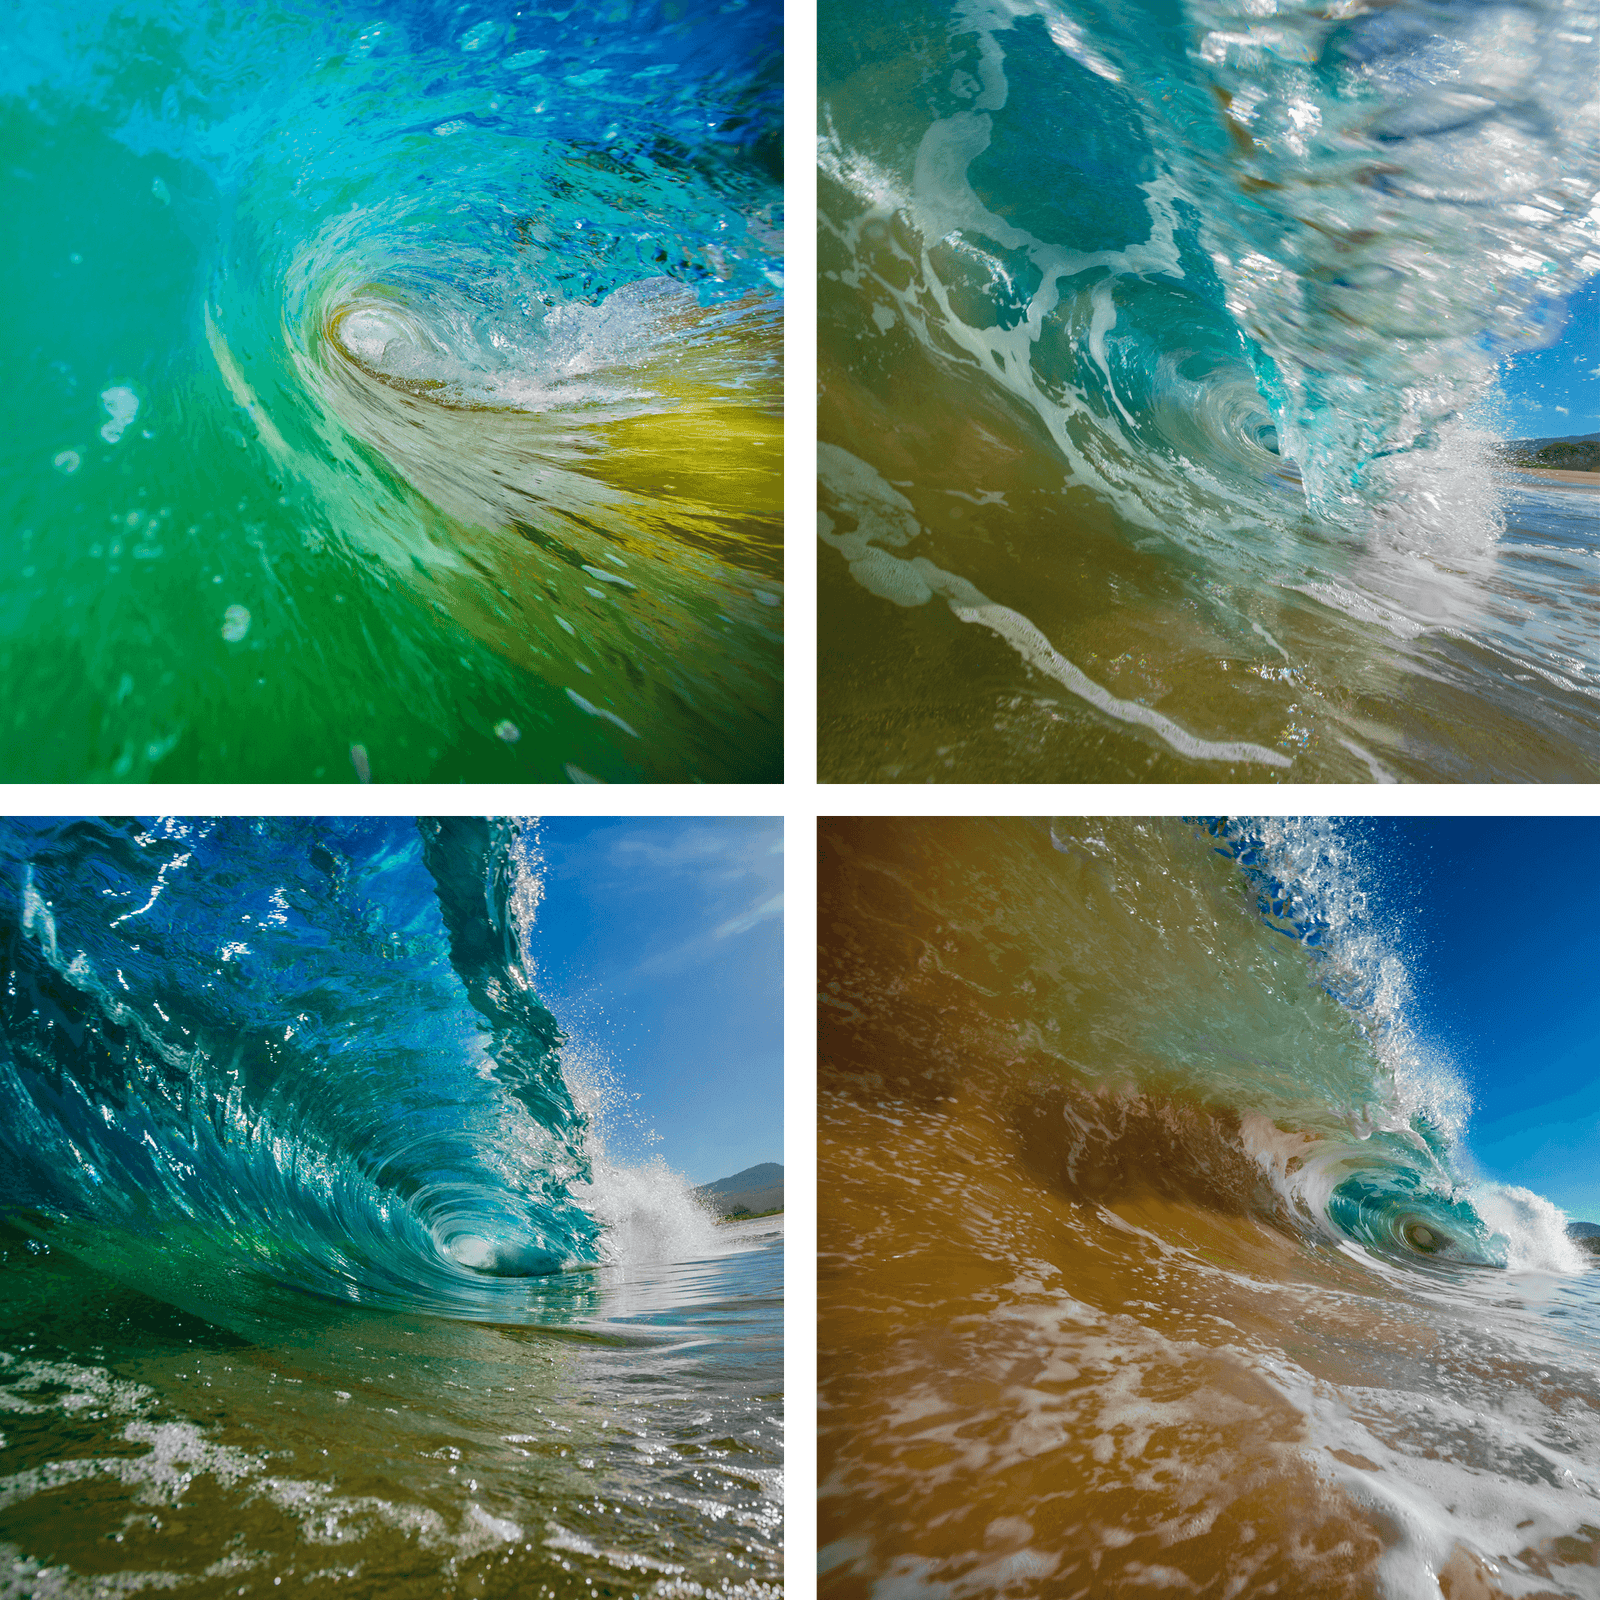 Photography by Peter Lik titled Waves | LIK Fine Art